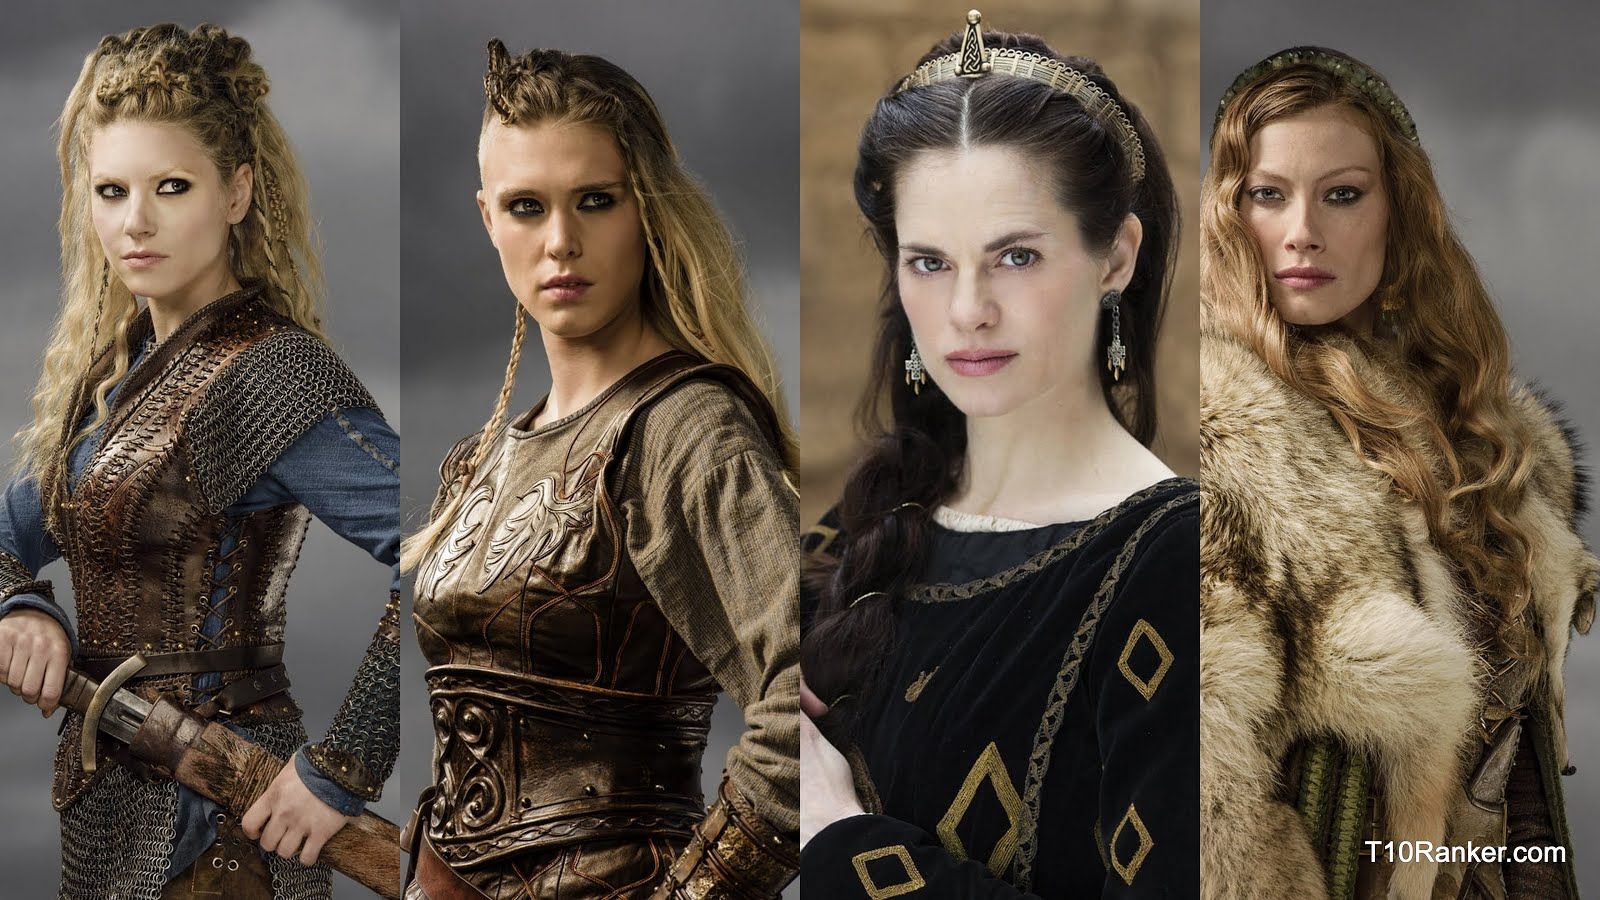 Vikings Most Hottest Women. Beautiful & Female Characters of Drama Series Vikings